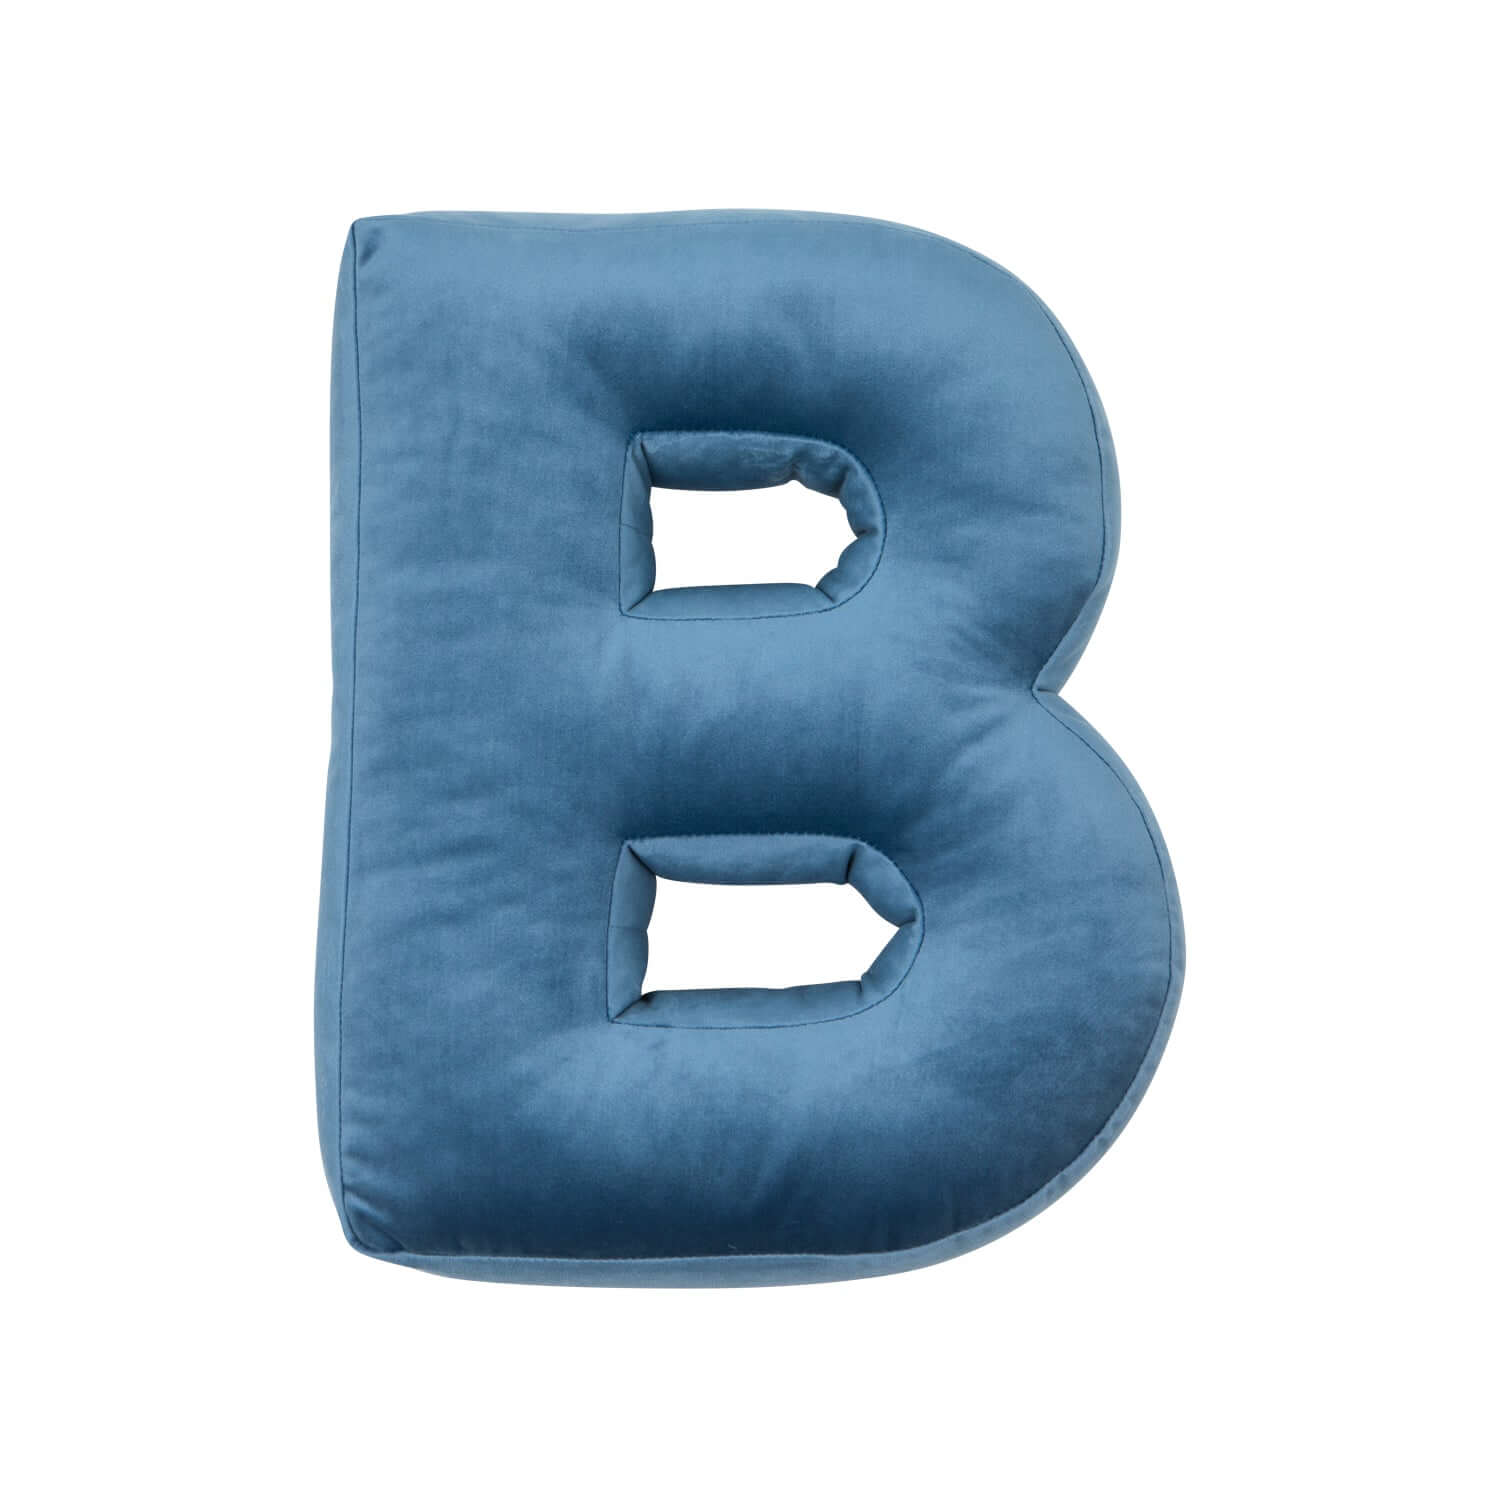 Velvet Letter Cushion B blue decoration gift idea for kids room. Baptism present from godparents 